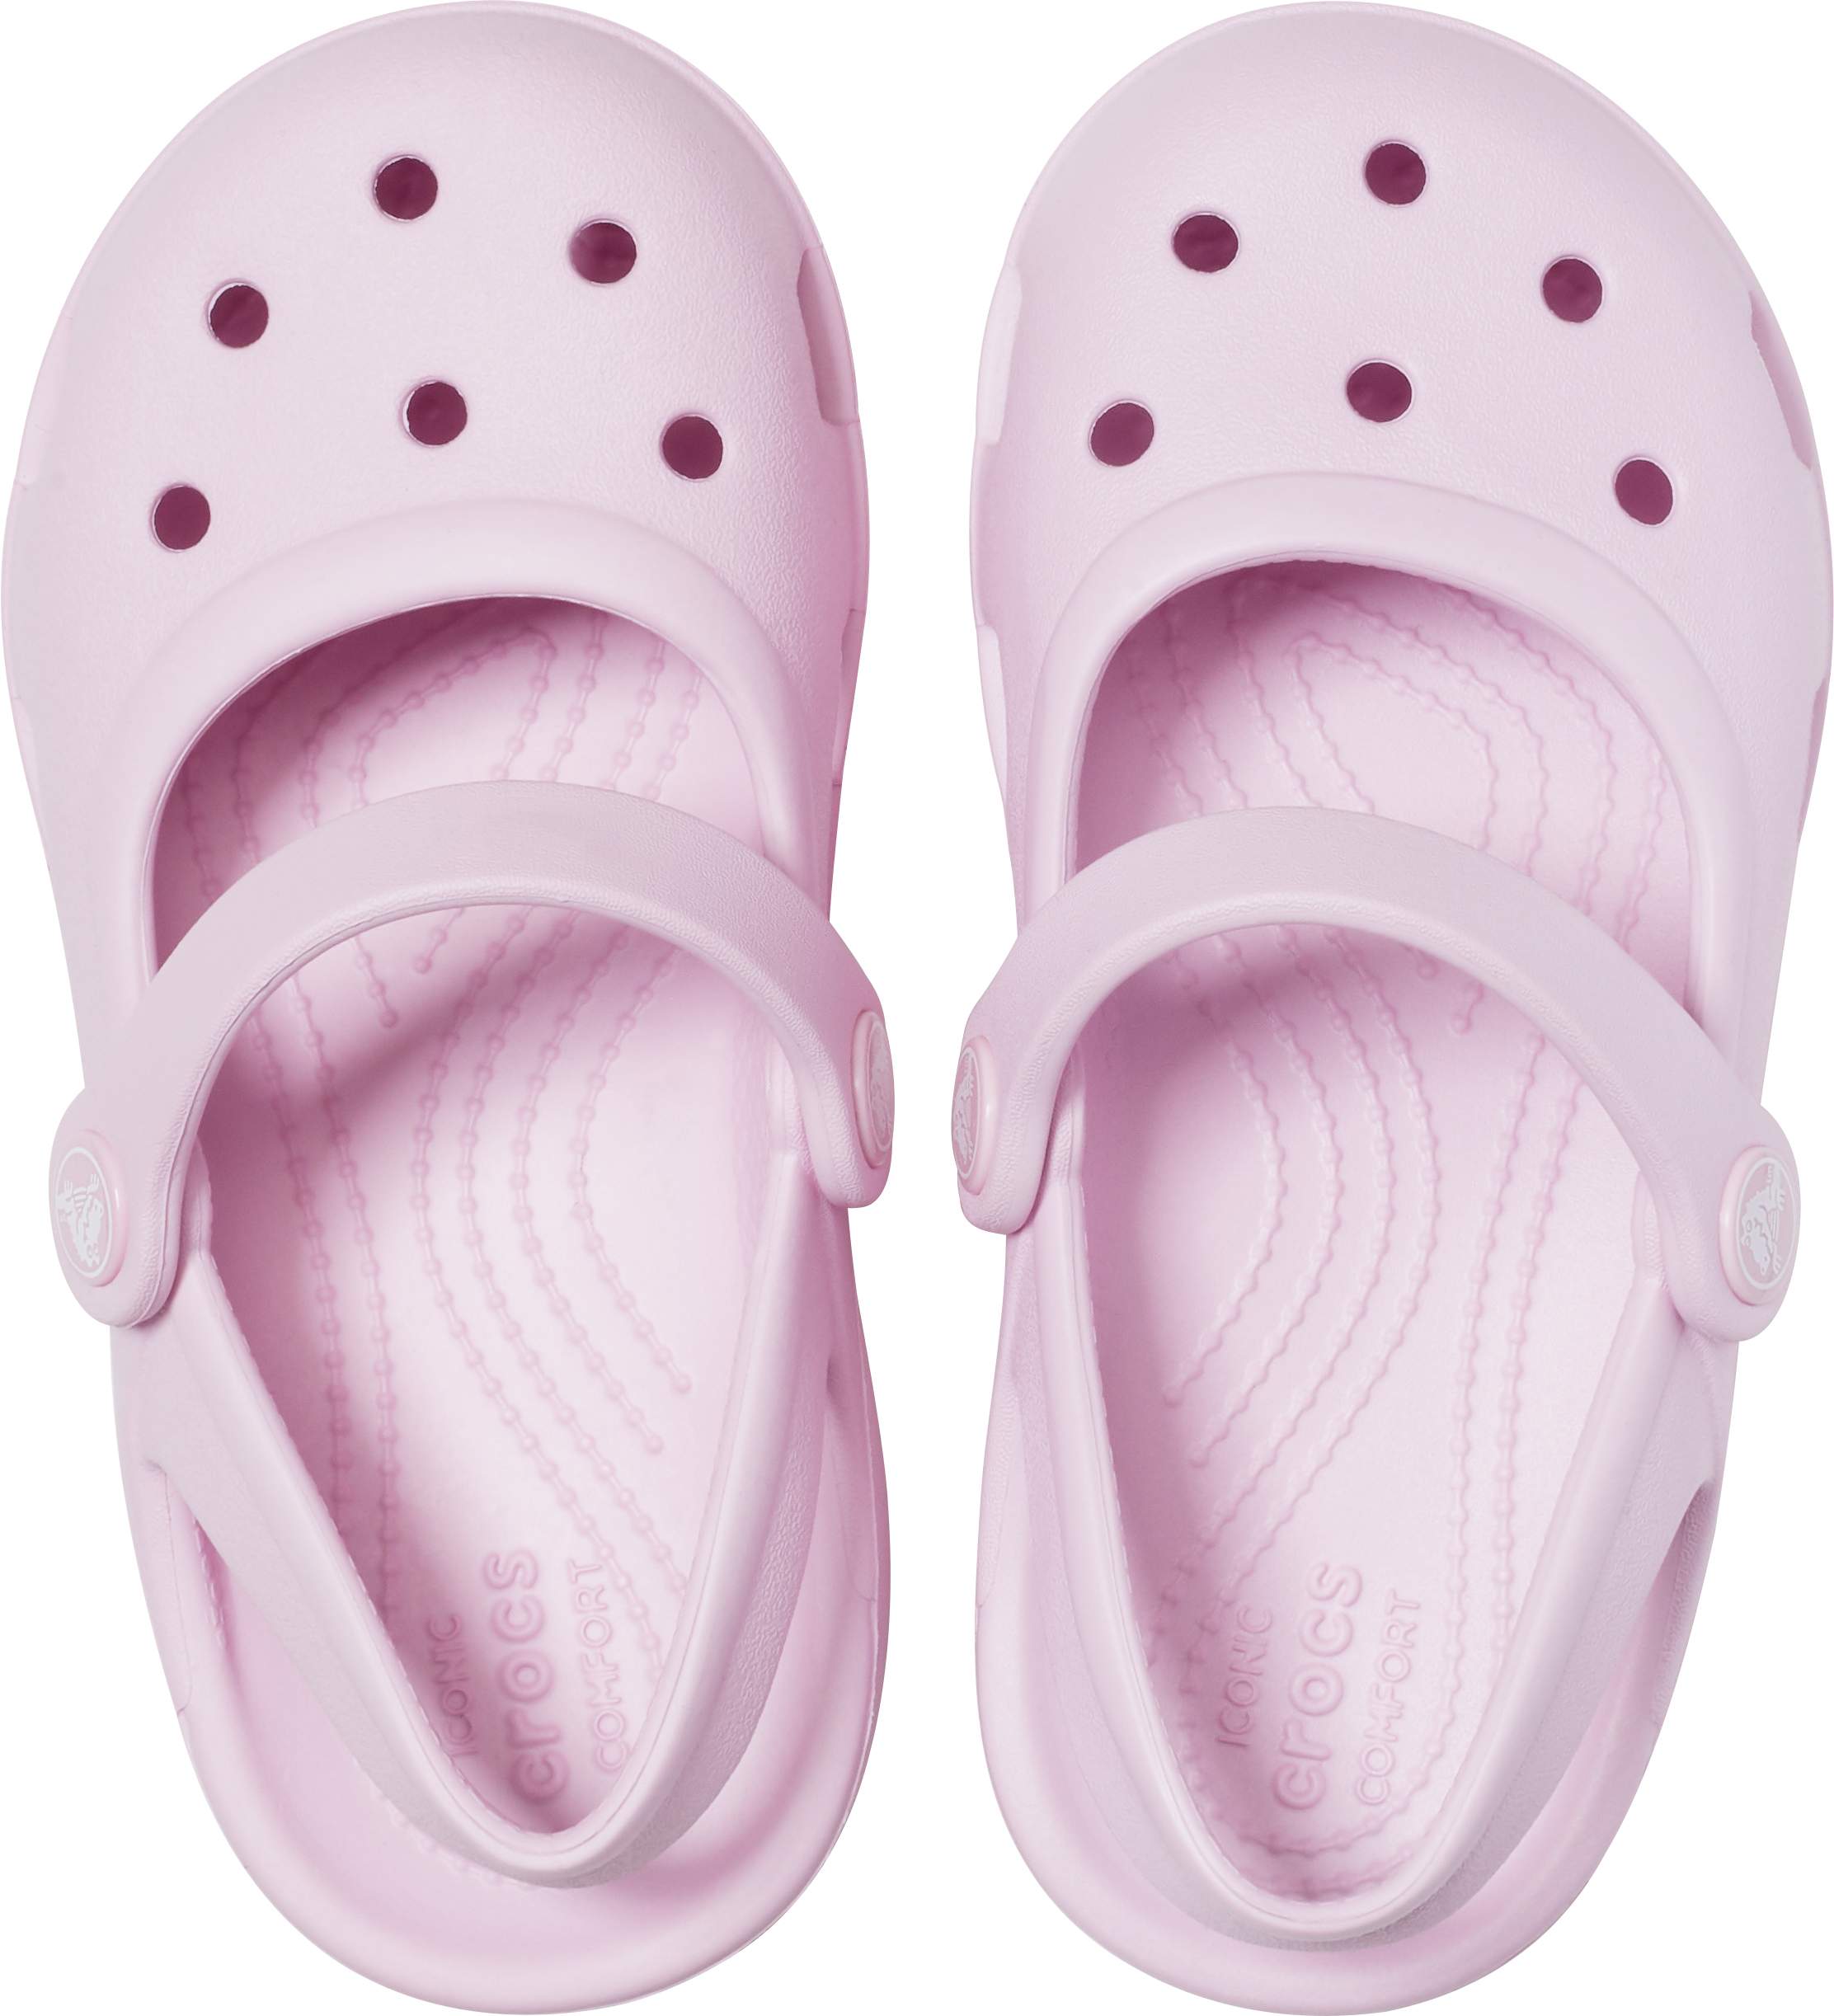 mary jane crocs pink